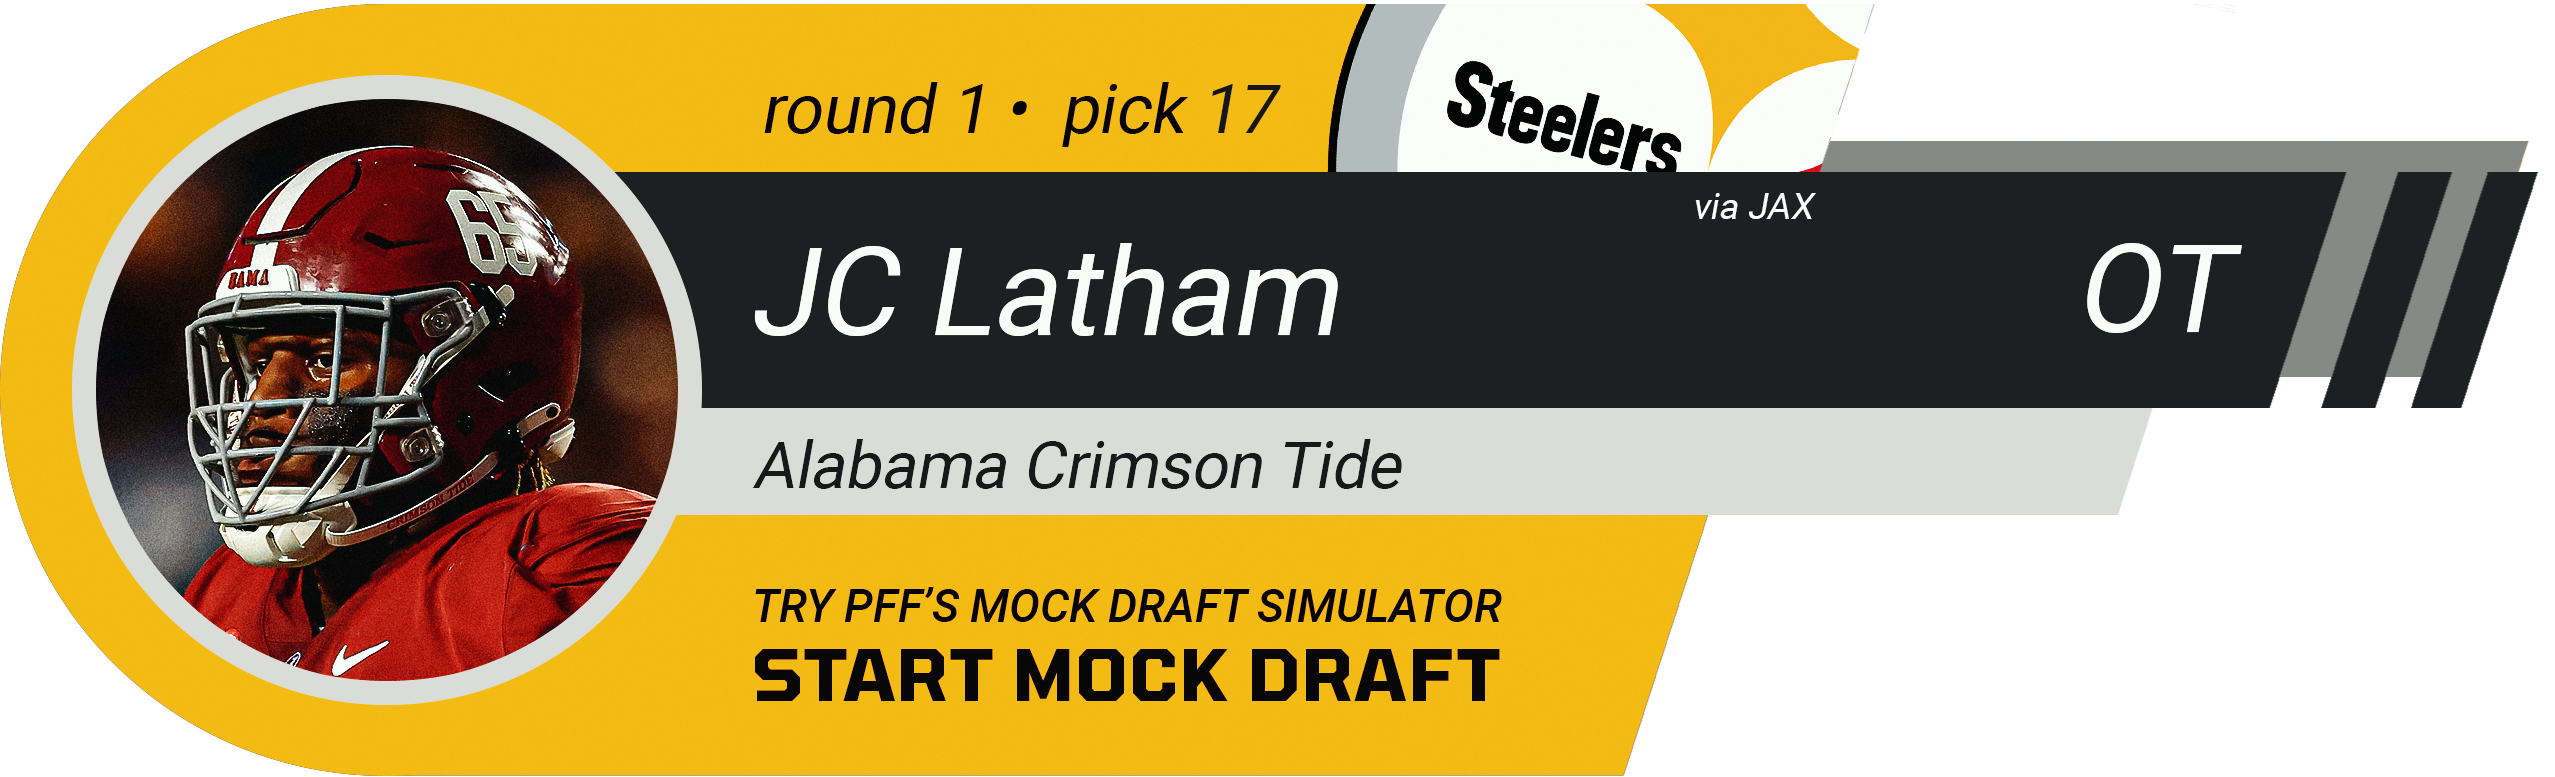 17. Pittsburgh Steelers: T JC Latham, Alabama